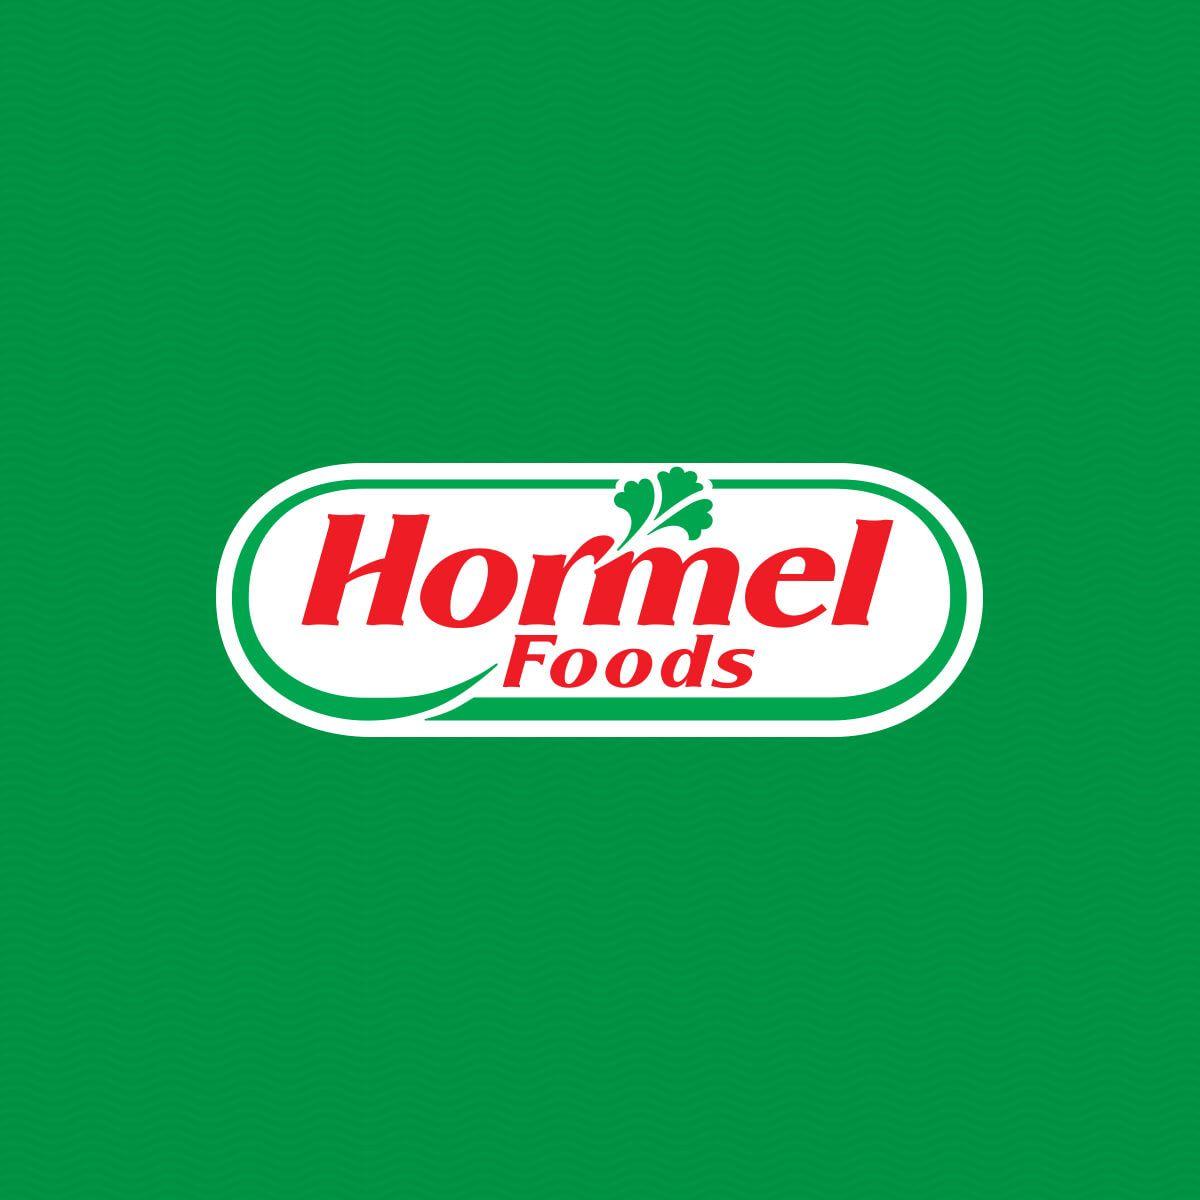 Blue and Green Food Logo - Hormel Foods